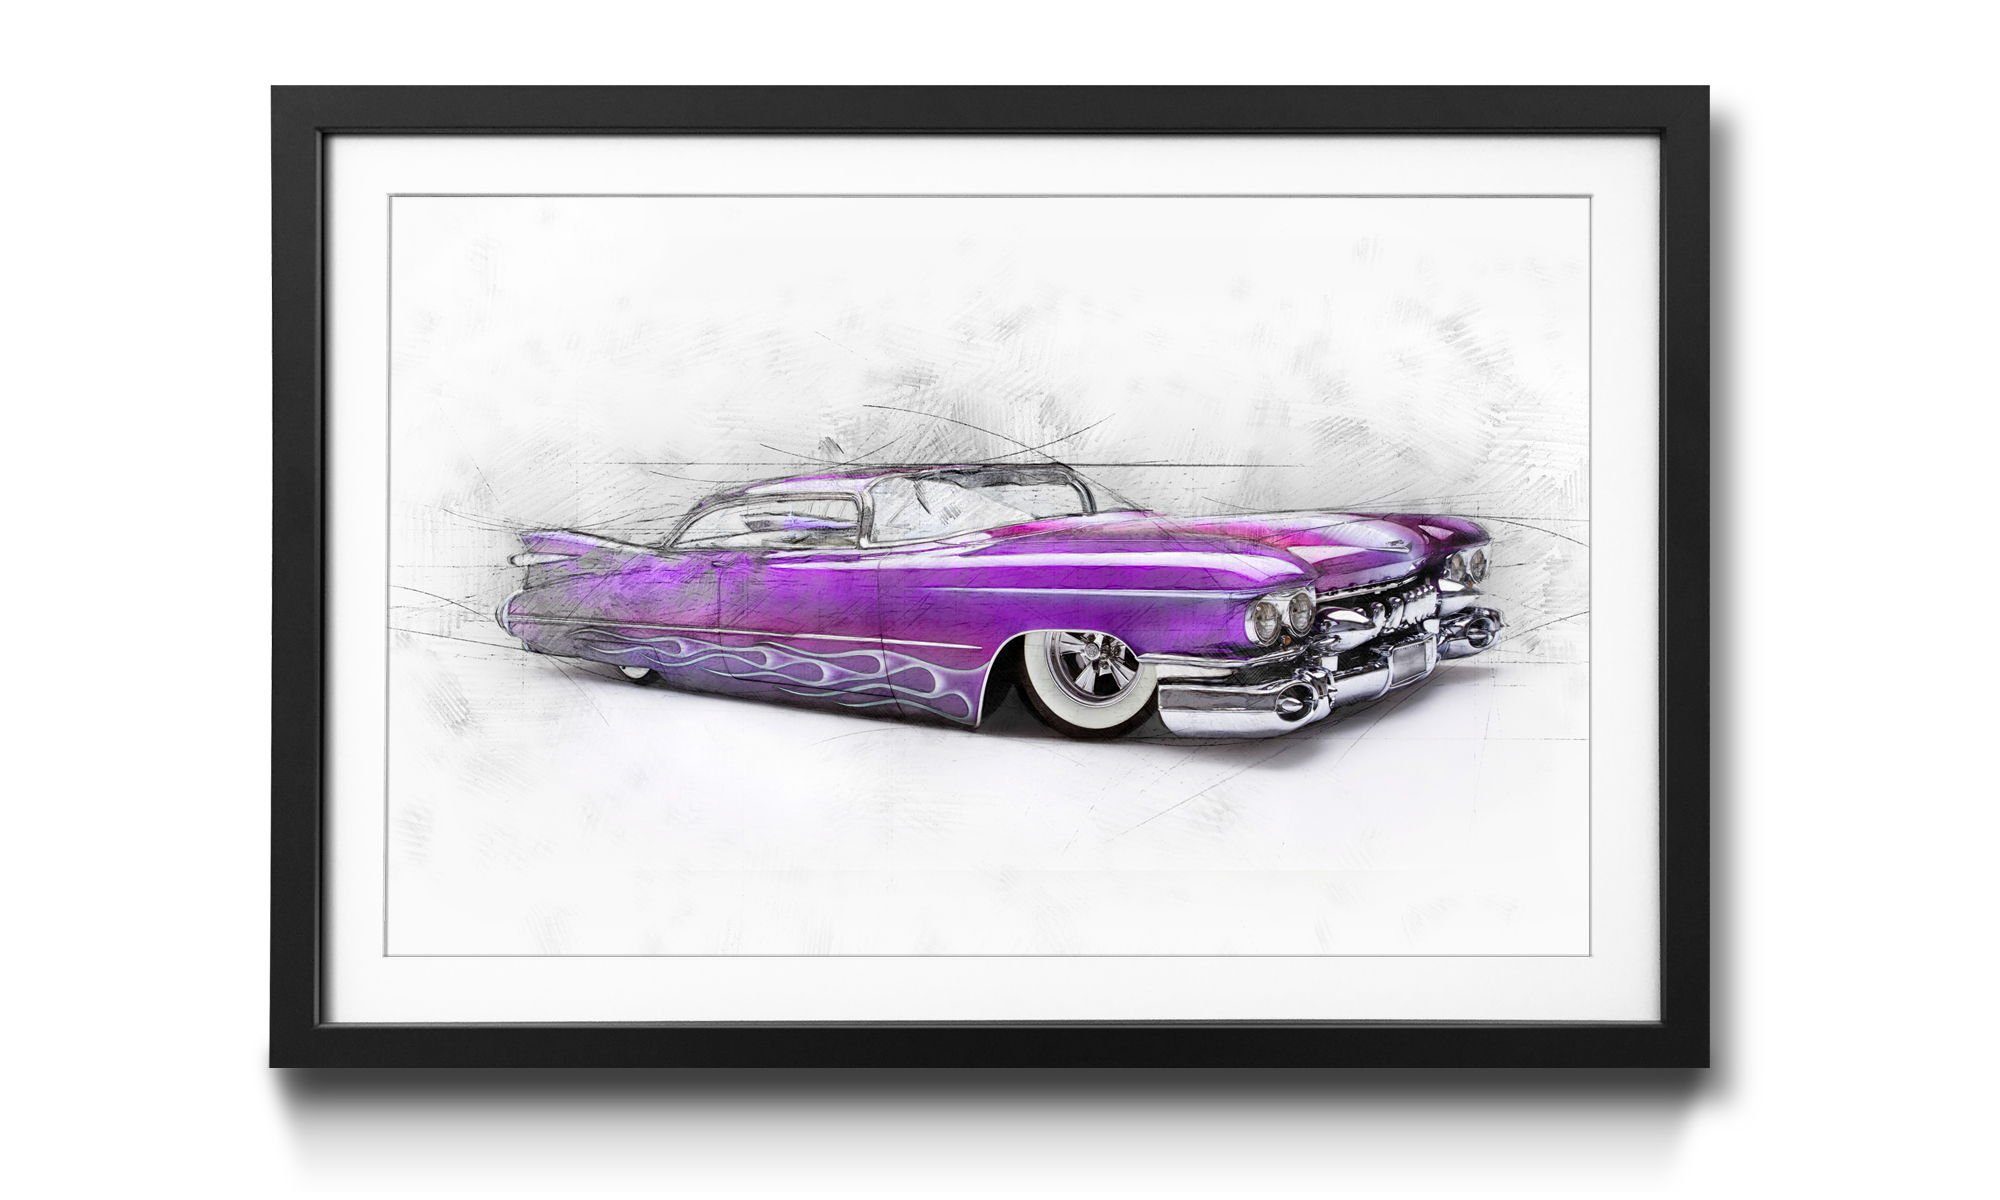 WandbilderXXL Bild mit erhältlich in Größen Rahmen Wandbild, 4 Cadillac, Auto, Pinky